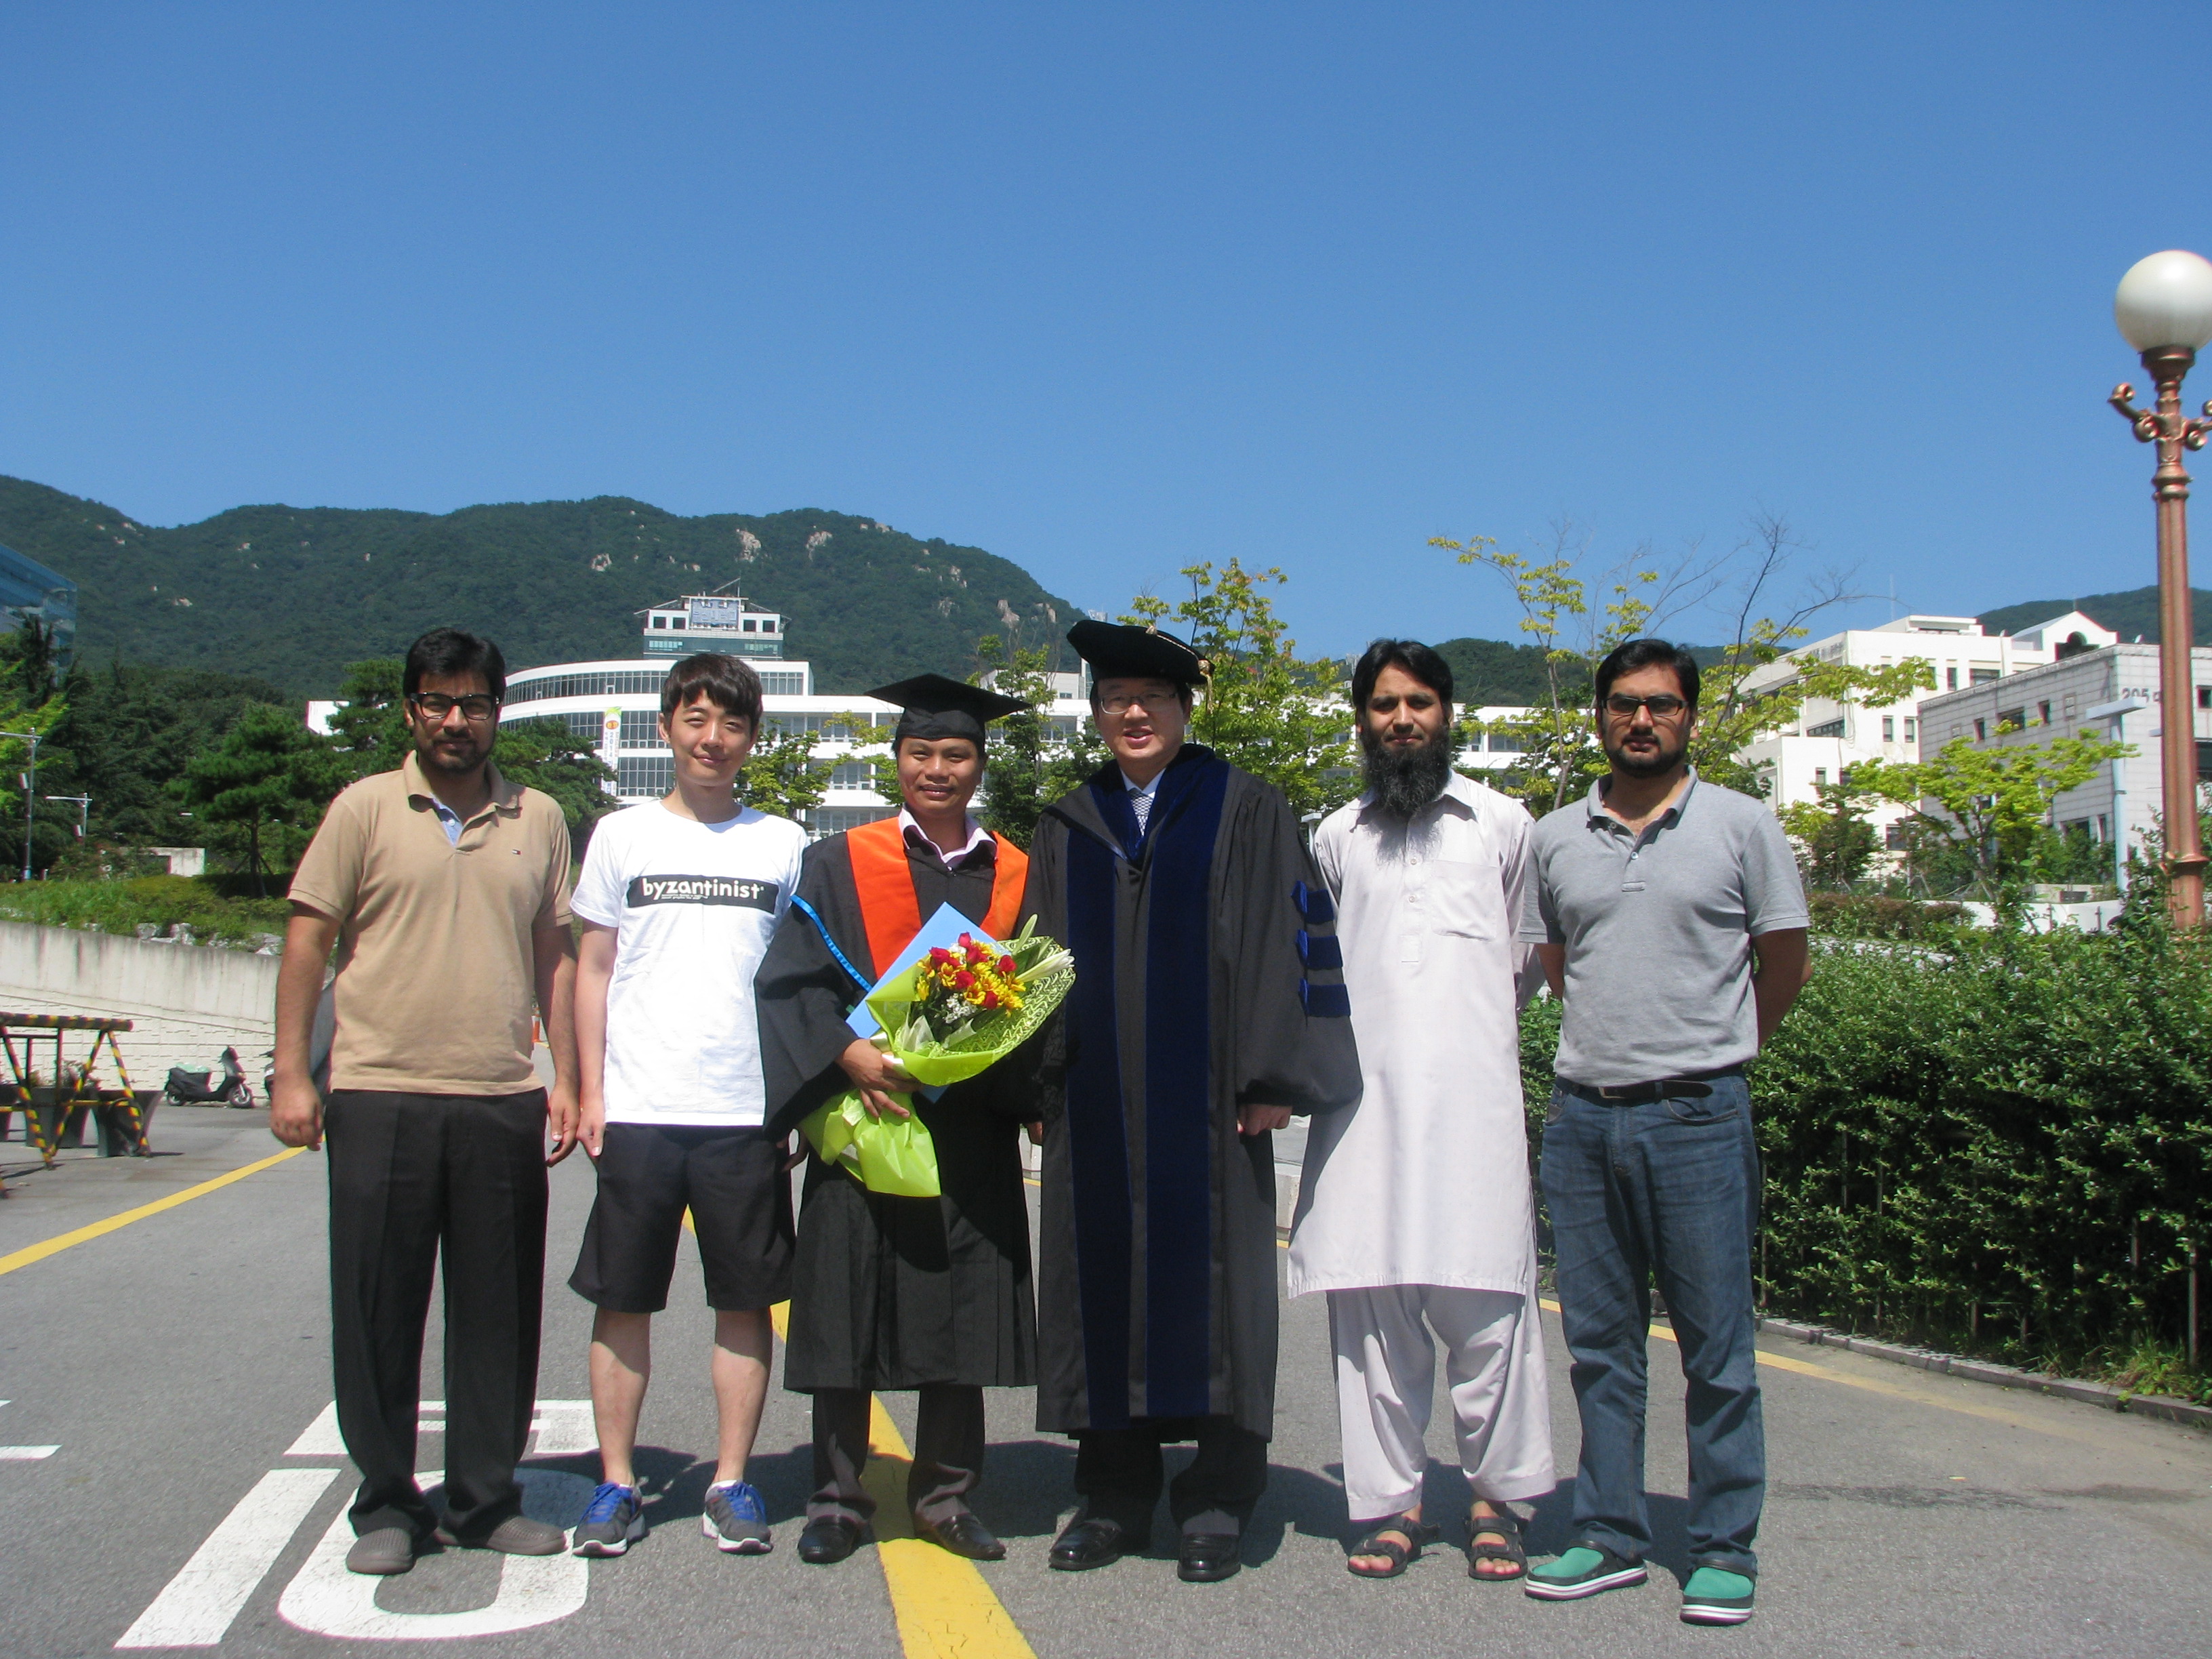 2014-08-22_Phan's graduation 2014-08-22_Phan graduation.JPG